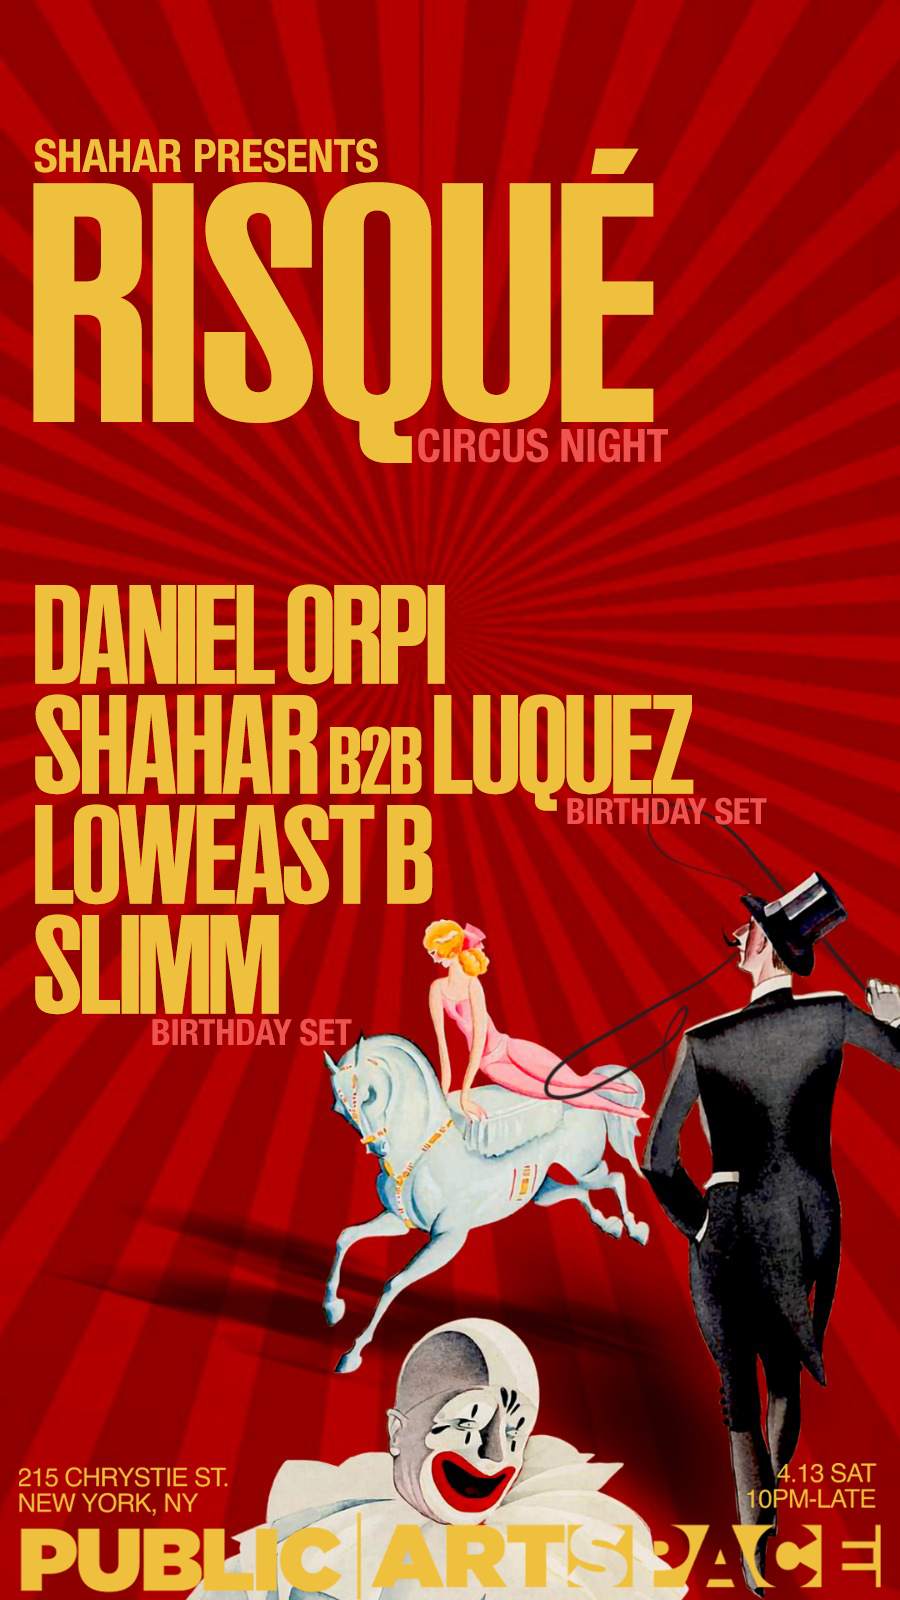 Shahar presents Risqué circus night W Daniel Orpi - フライヤー裏